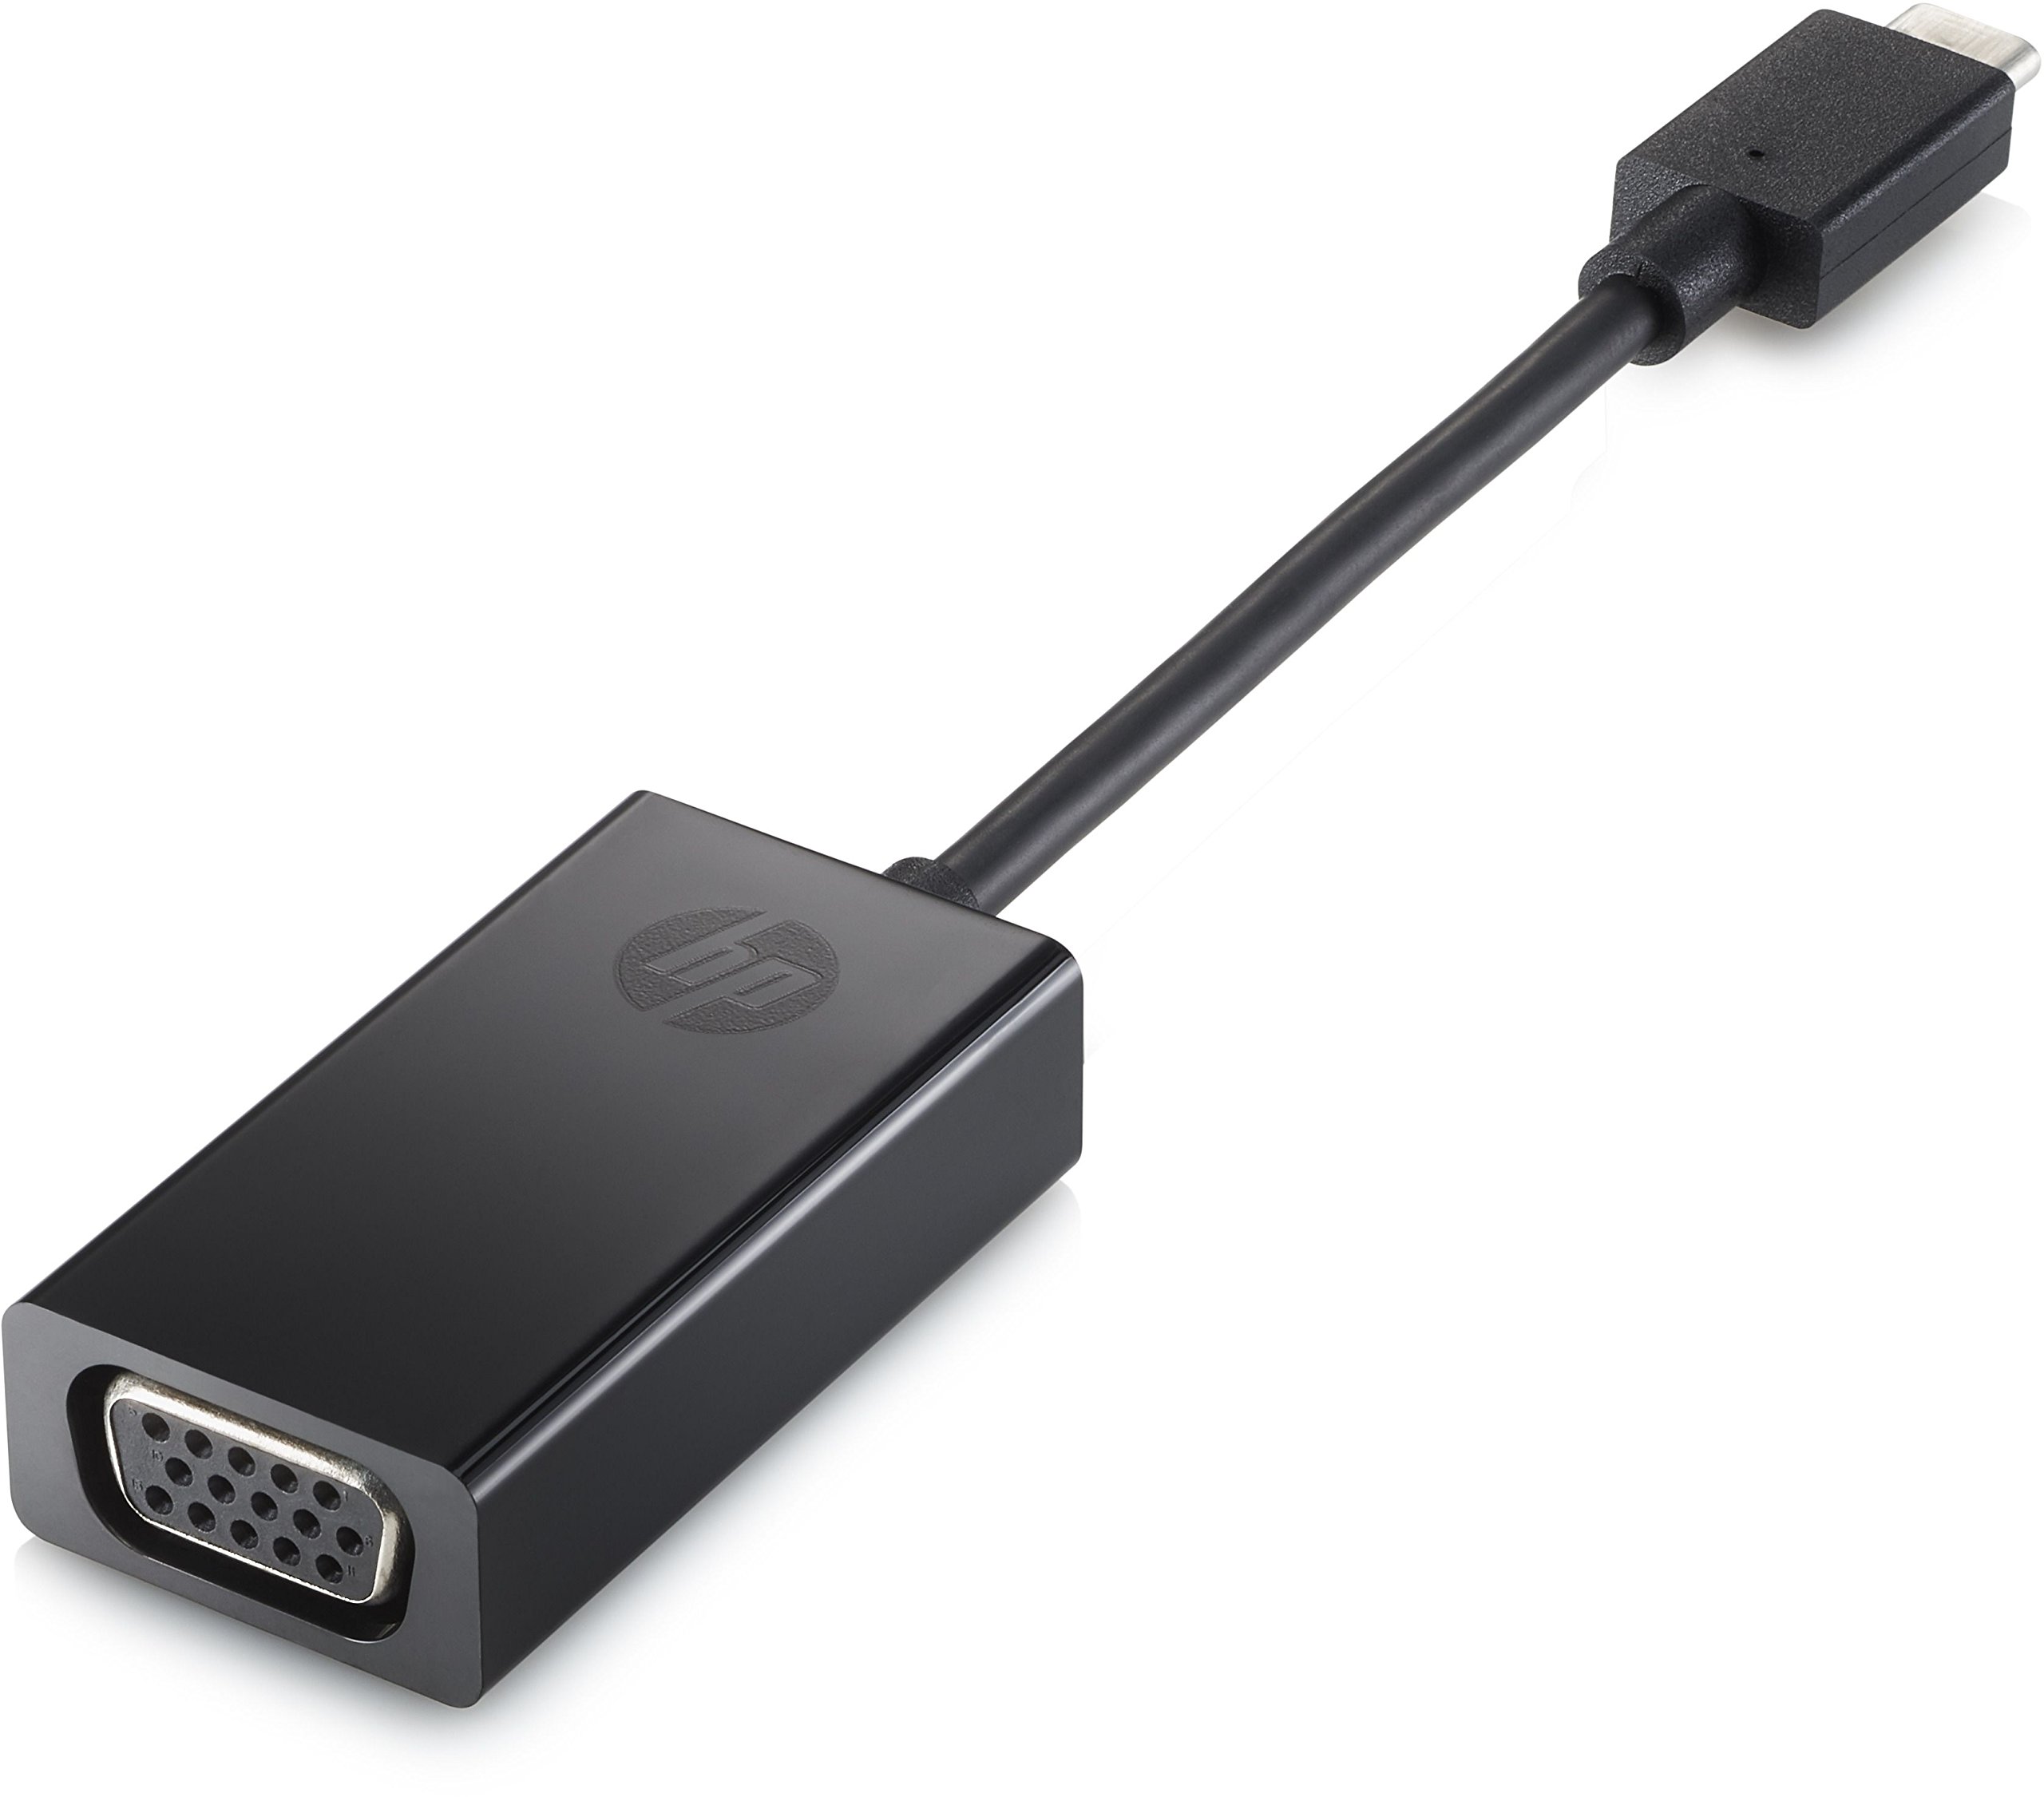 HP USB-C TO VGA ADAPTER